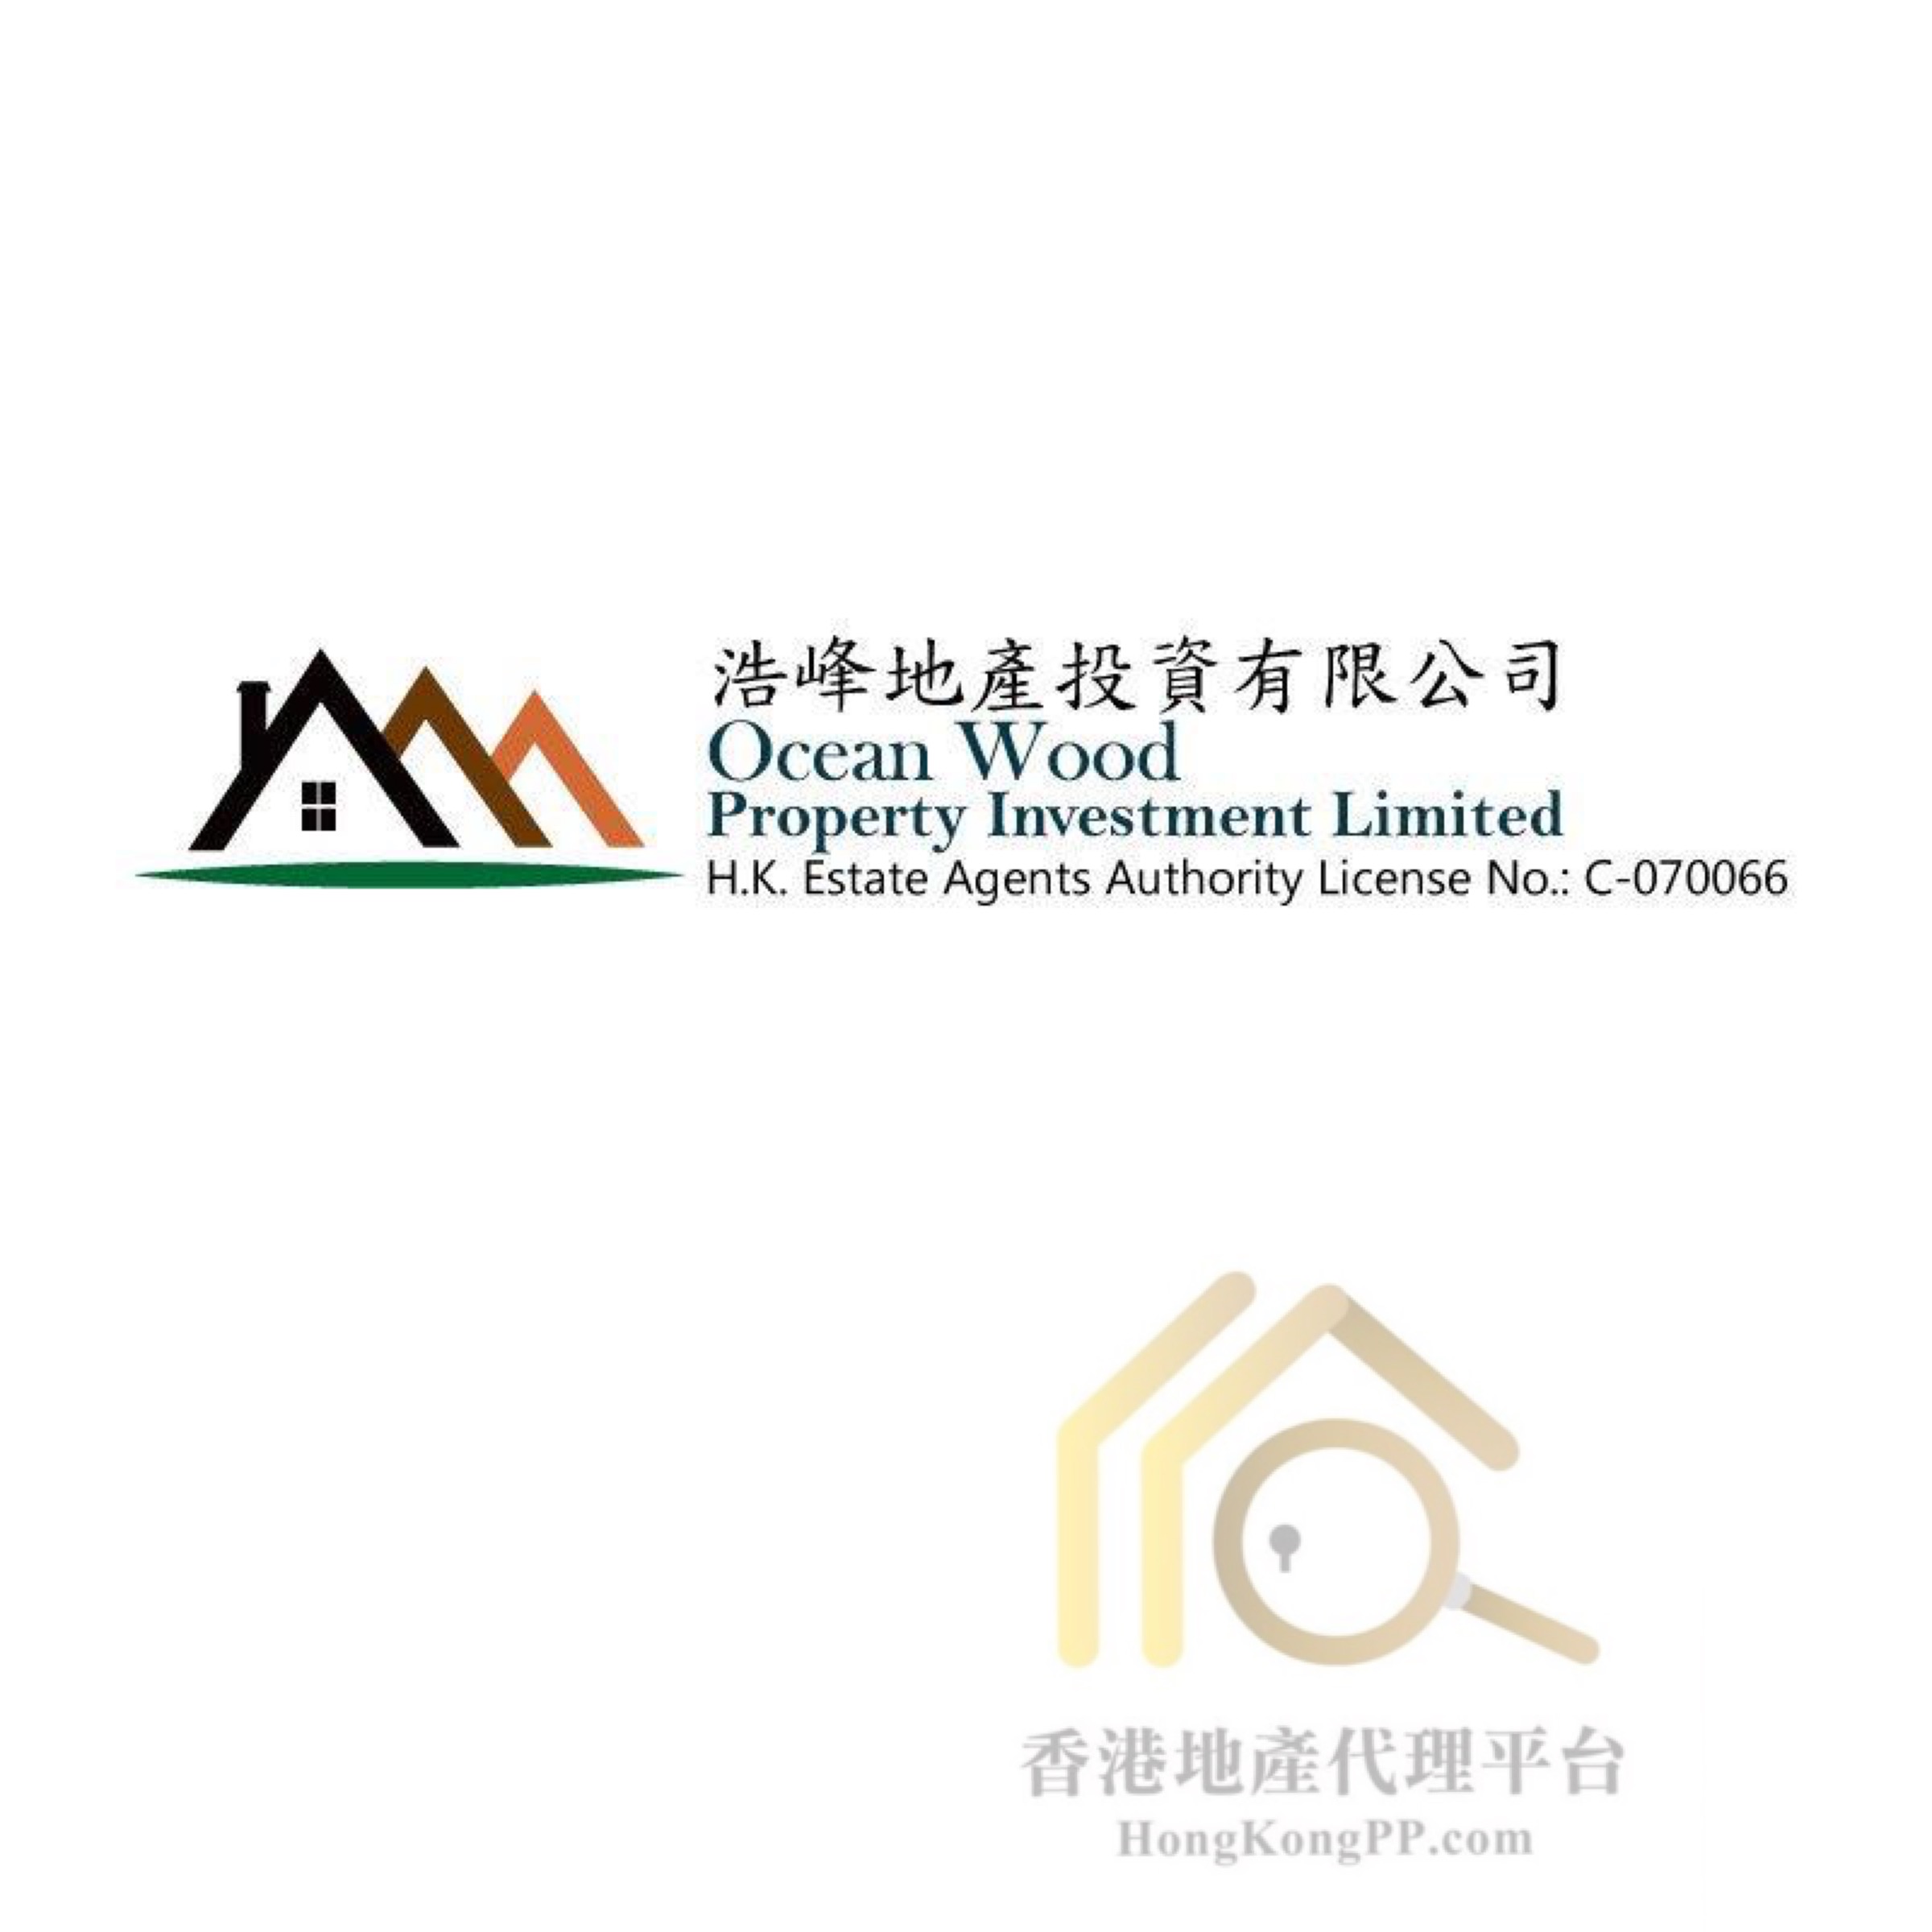 HousingEstate Agent: 浩峰地產投資有限公司